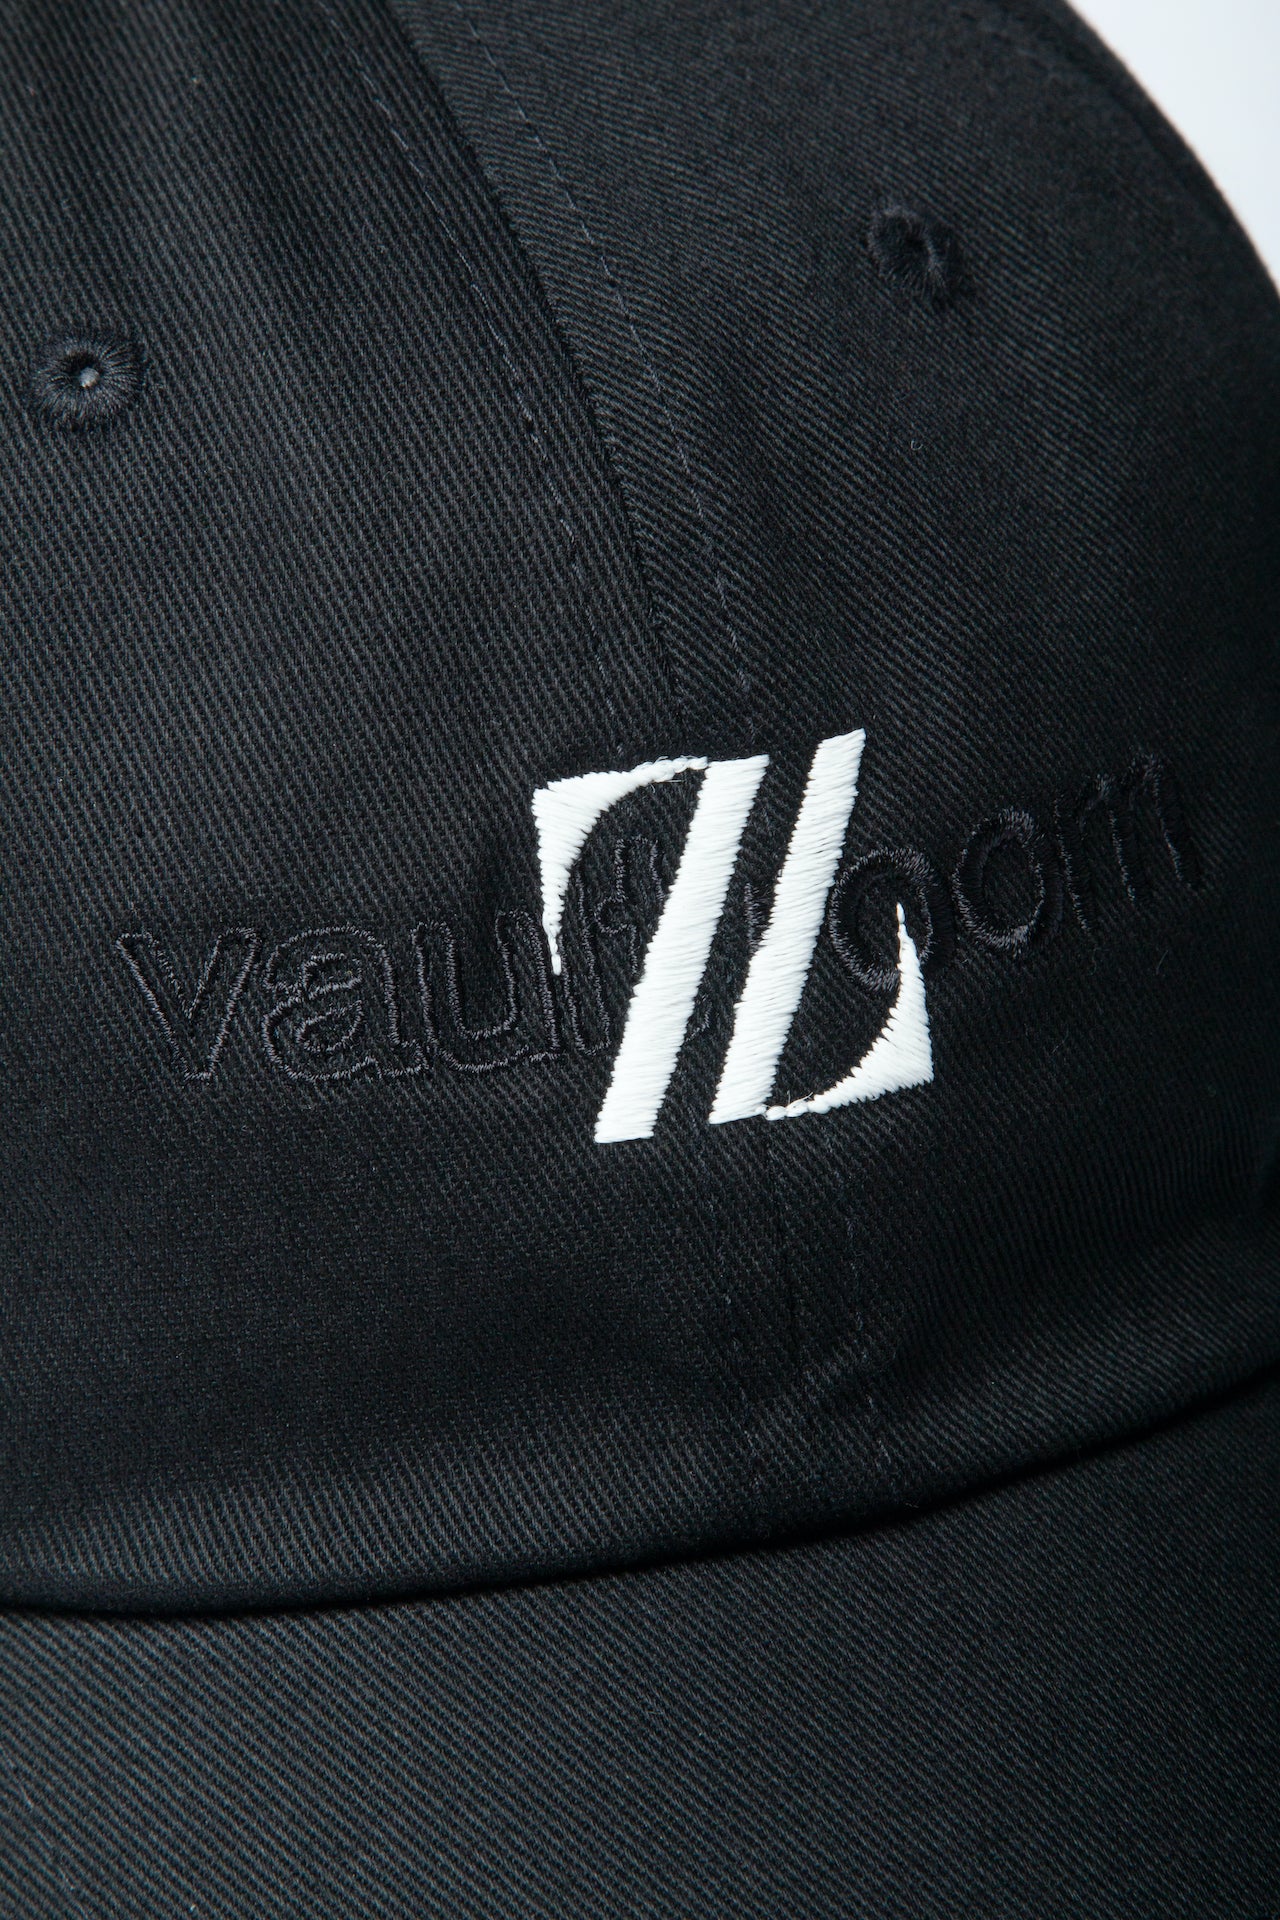 ZETA DIVISION x vaultroom LOGO CAP